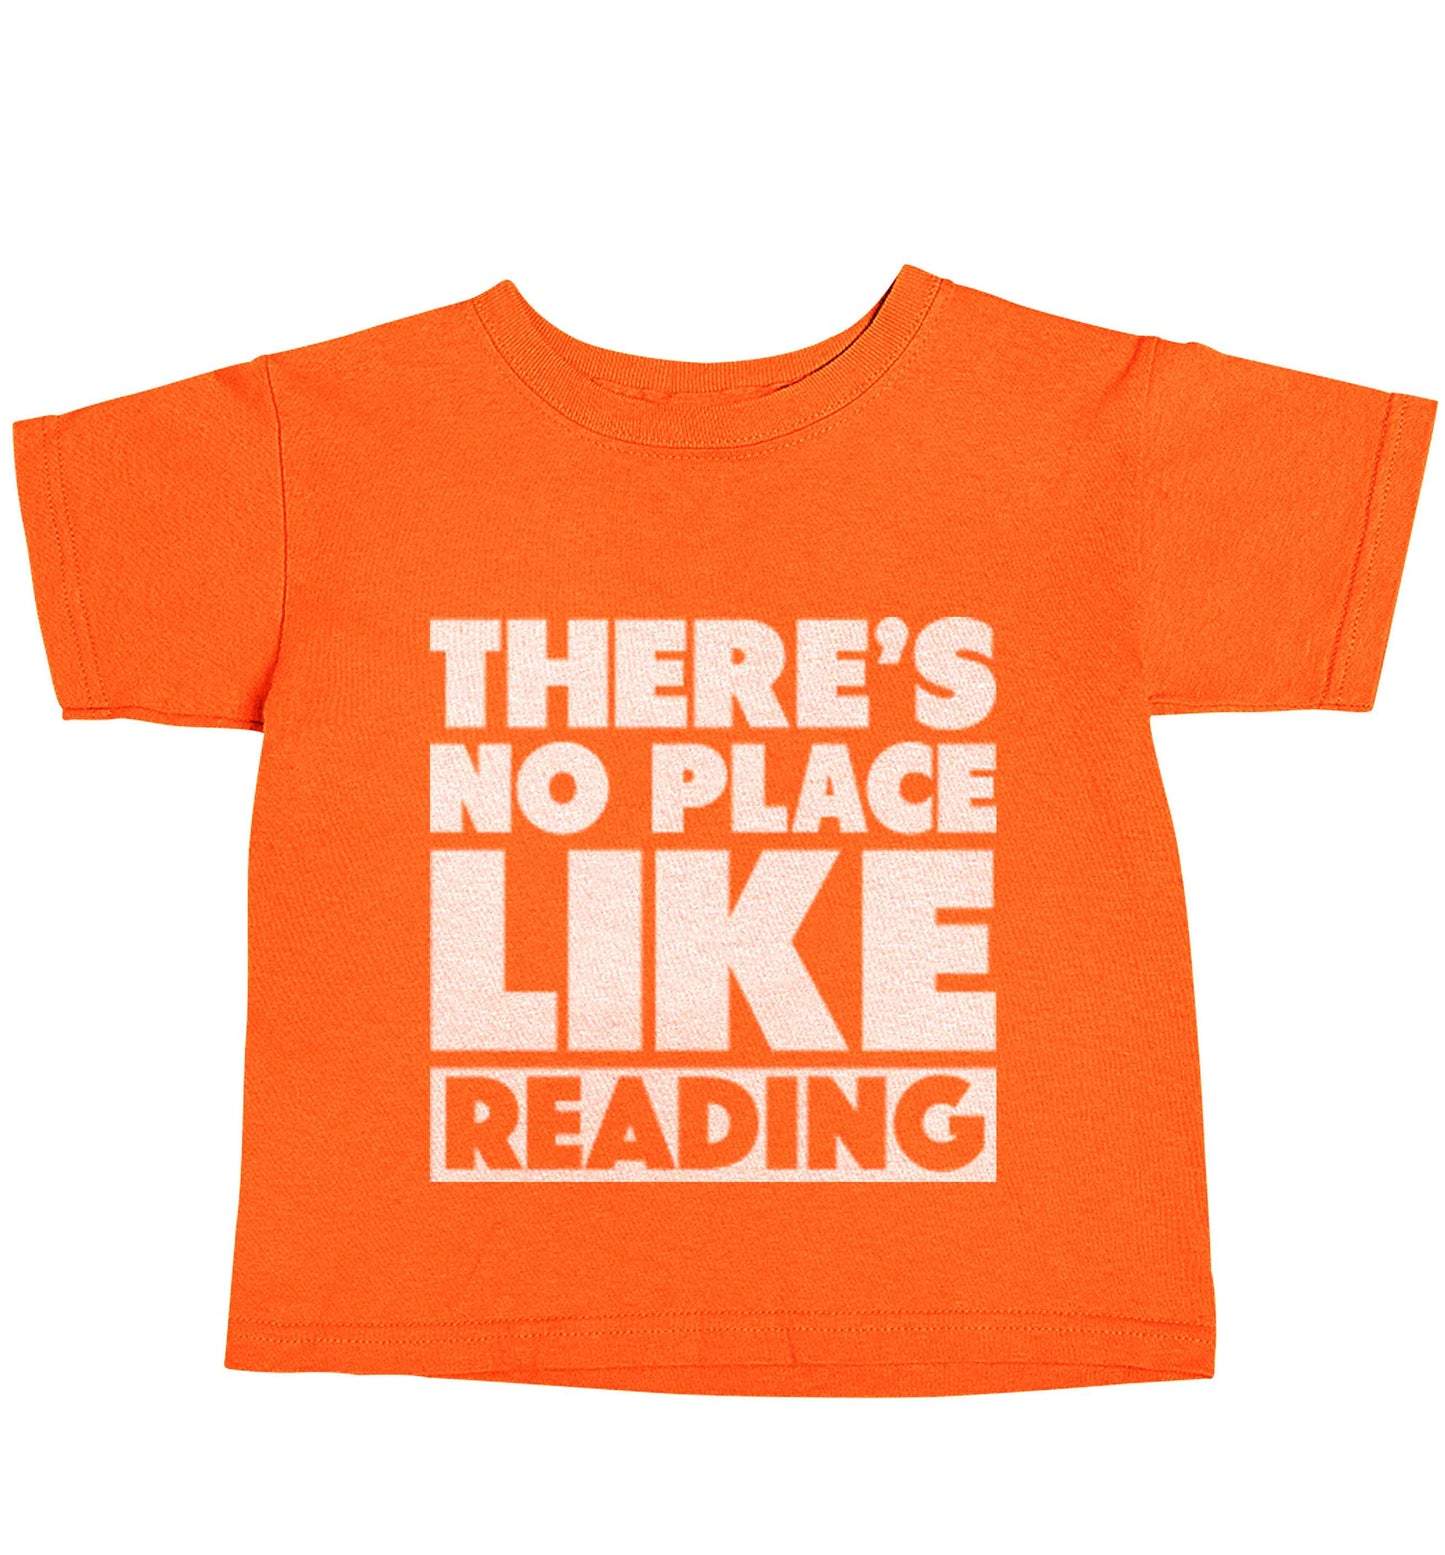 There's no place like Readingorange baby toddler Tshirt 2 Years